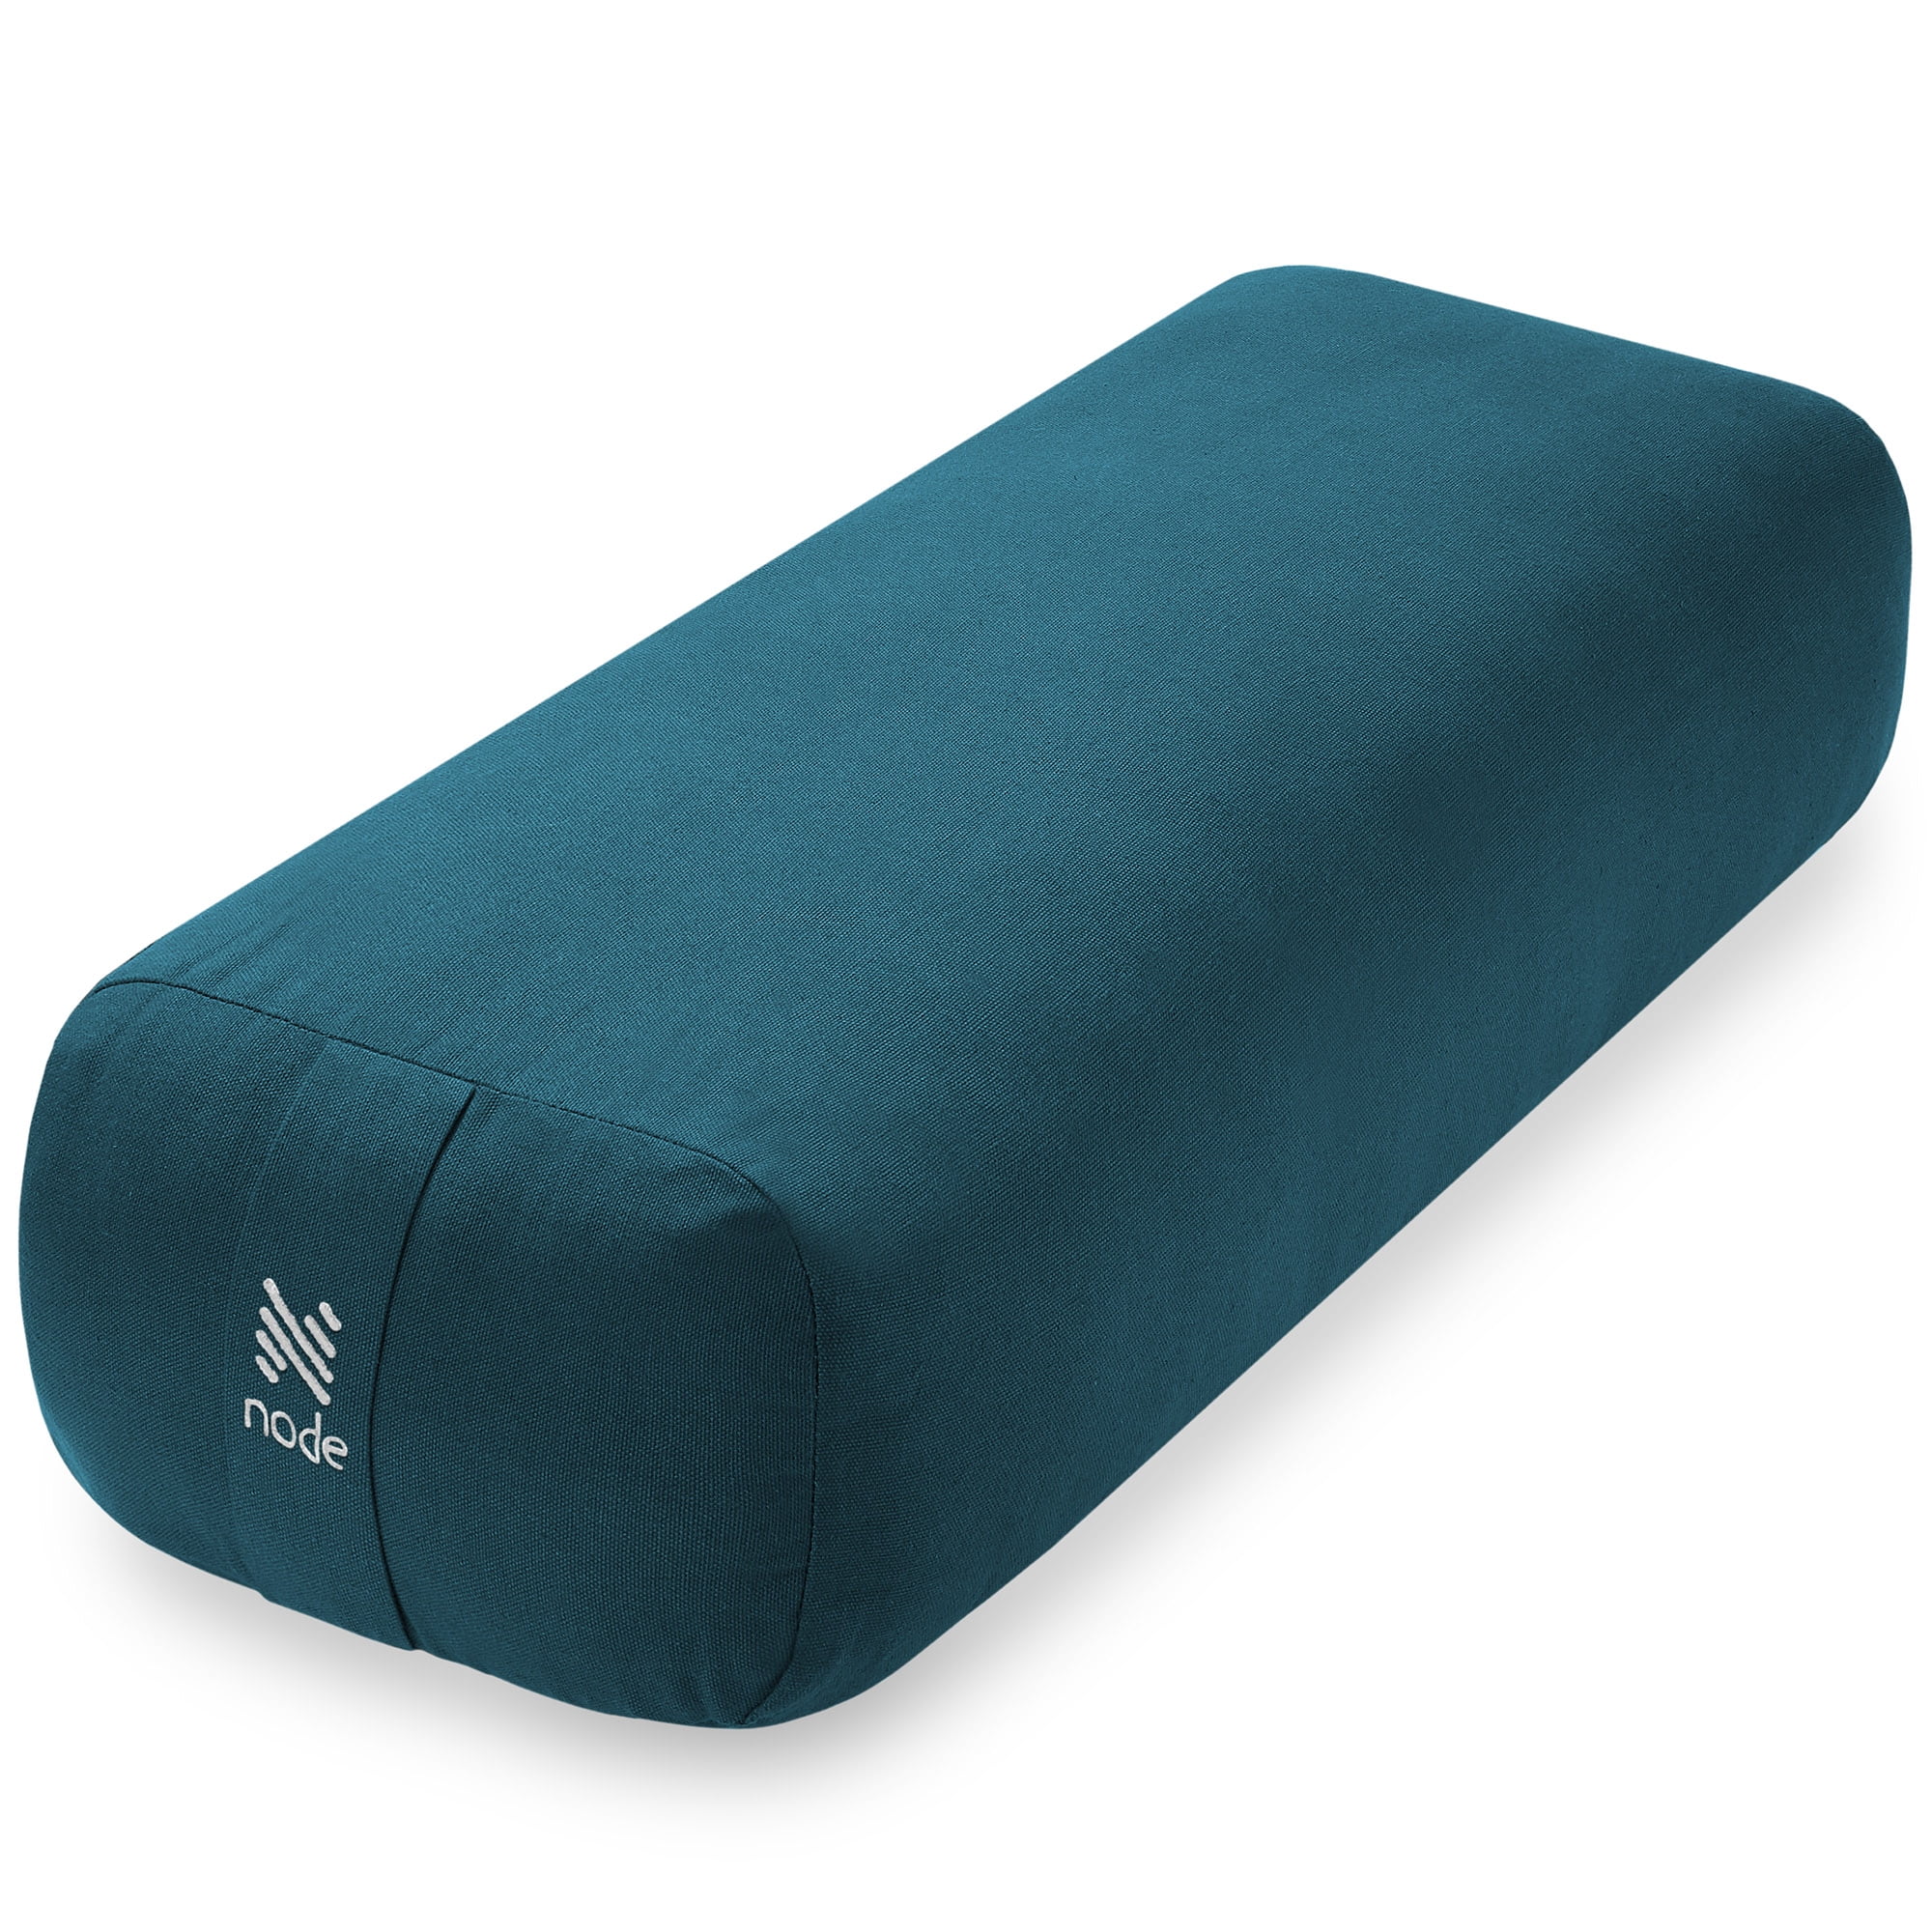 Node Fitness Yoga Meditation Cushion, 25 x 12 Rectangular Bolster with  Organic Cotton Cover - Black 